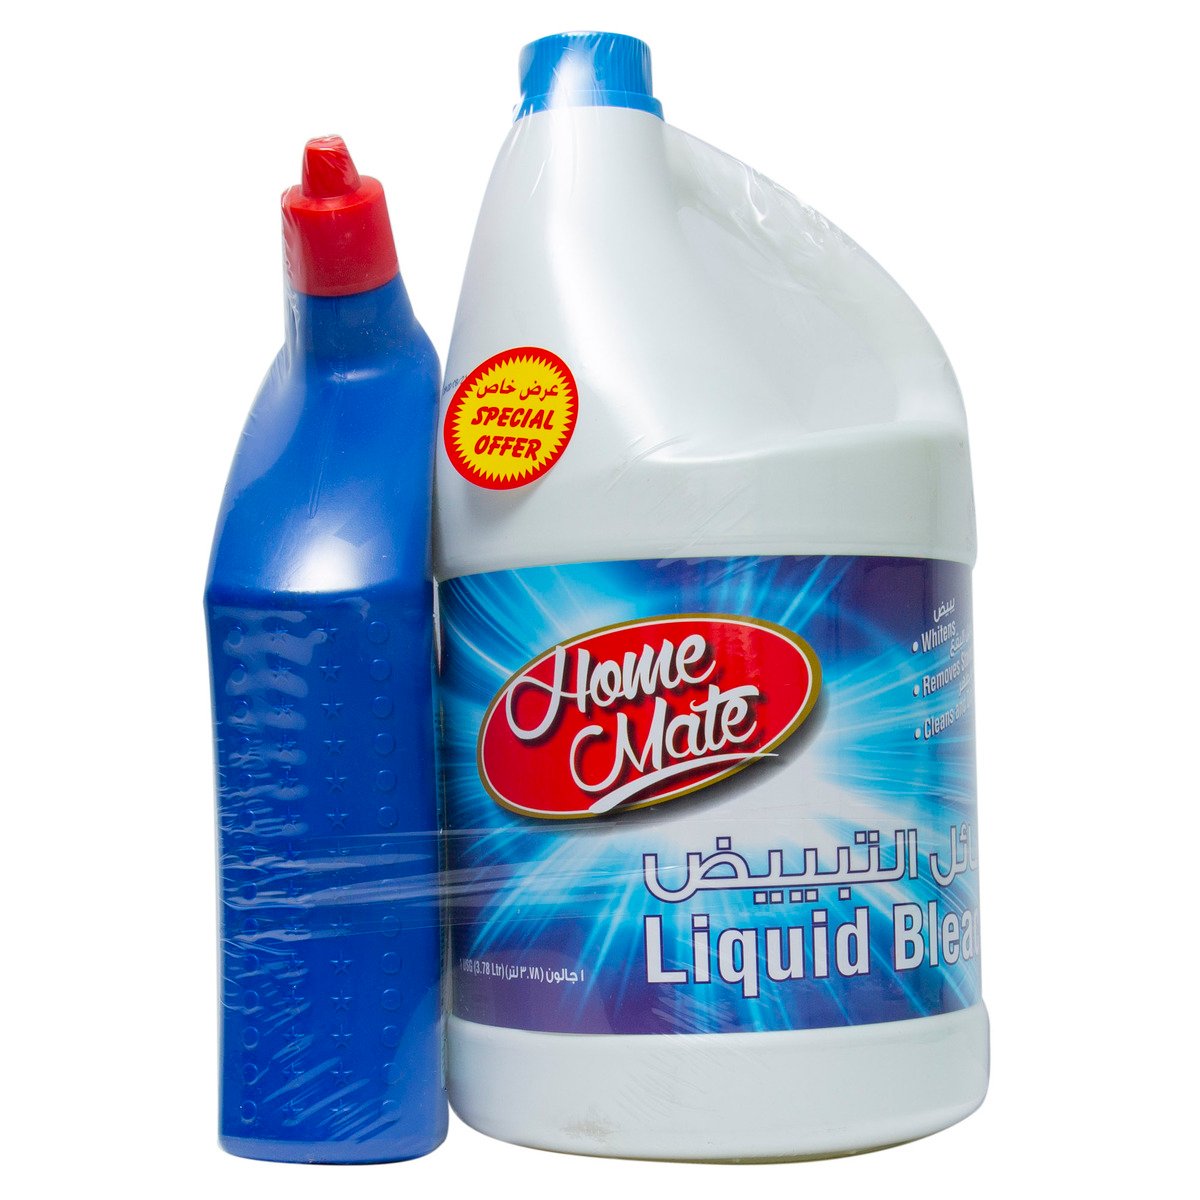 Home Mate Liquid Bleach 3.78Litre + Toilet Cleaner 1Litre